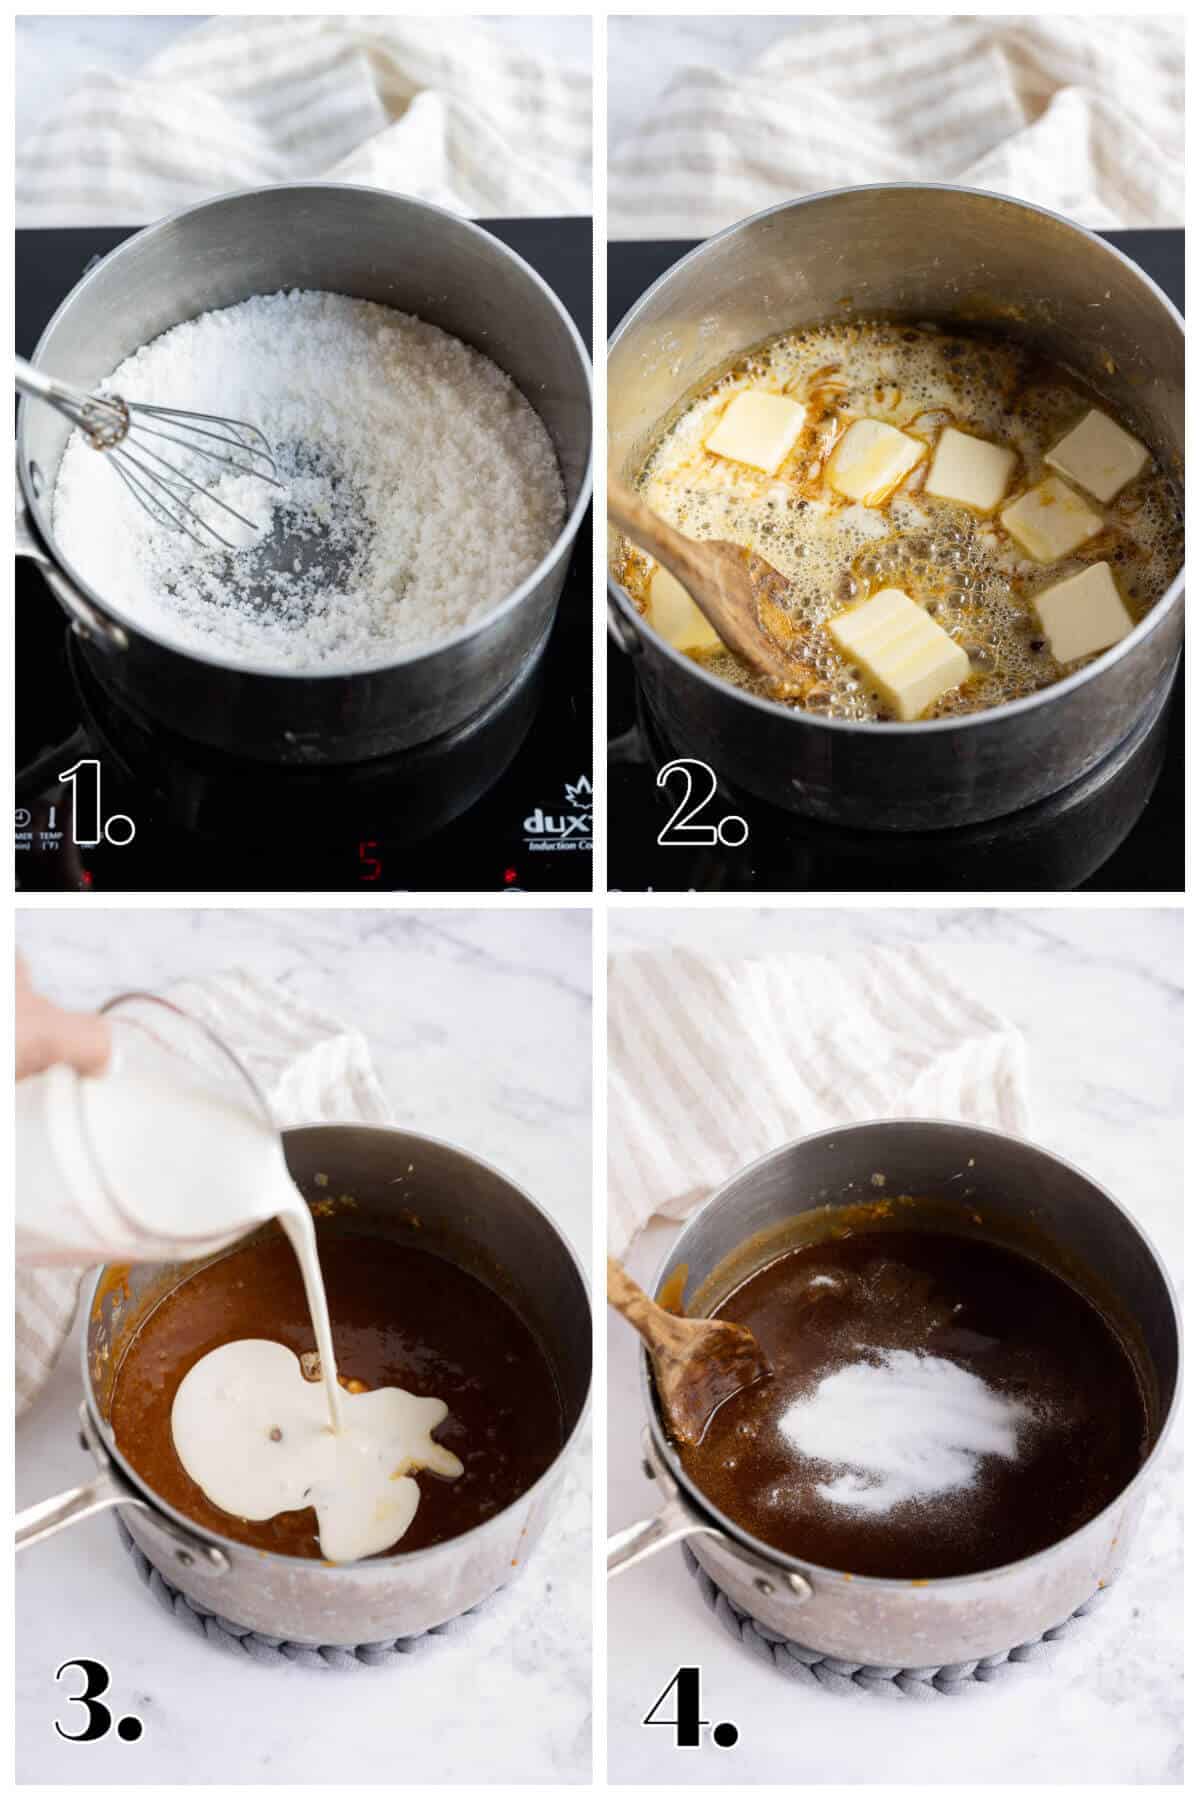 4-image collage showing steps to making homemade caramel: Melt sugar, add butter, add, cream, add salt.